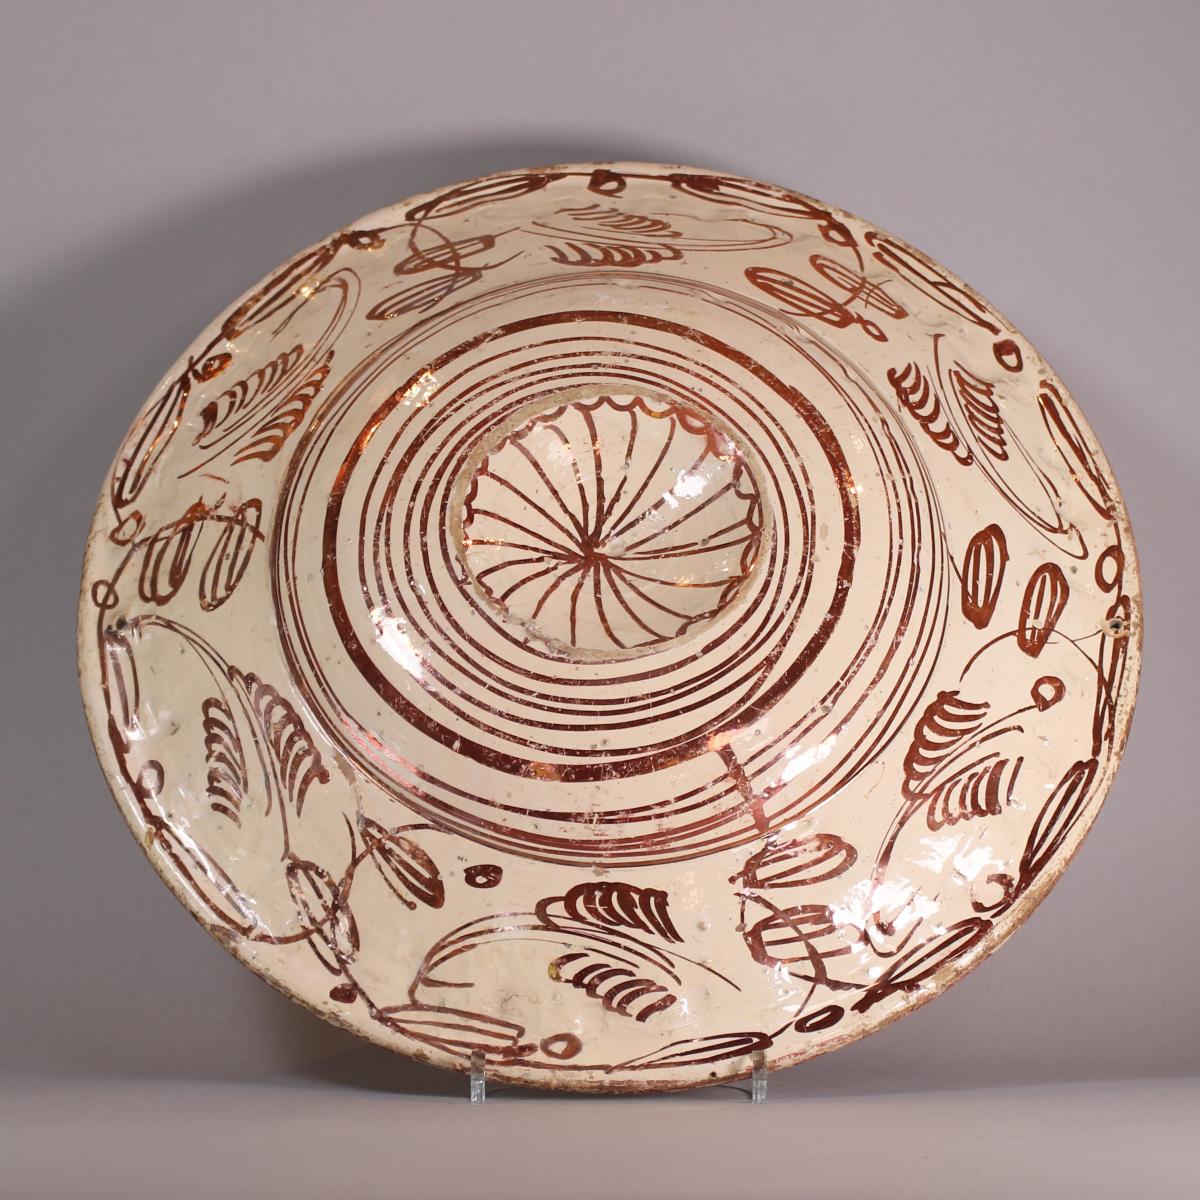 Hispano-Moresque lustre pottery charger, 16th century | BADA